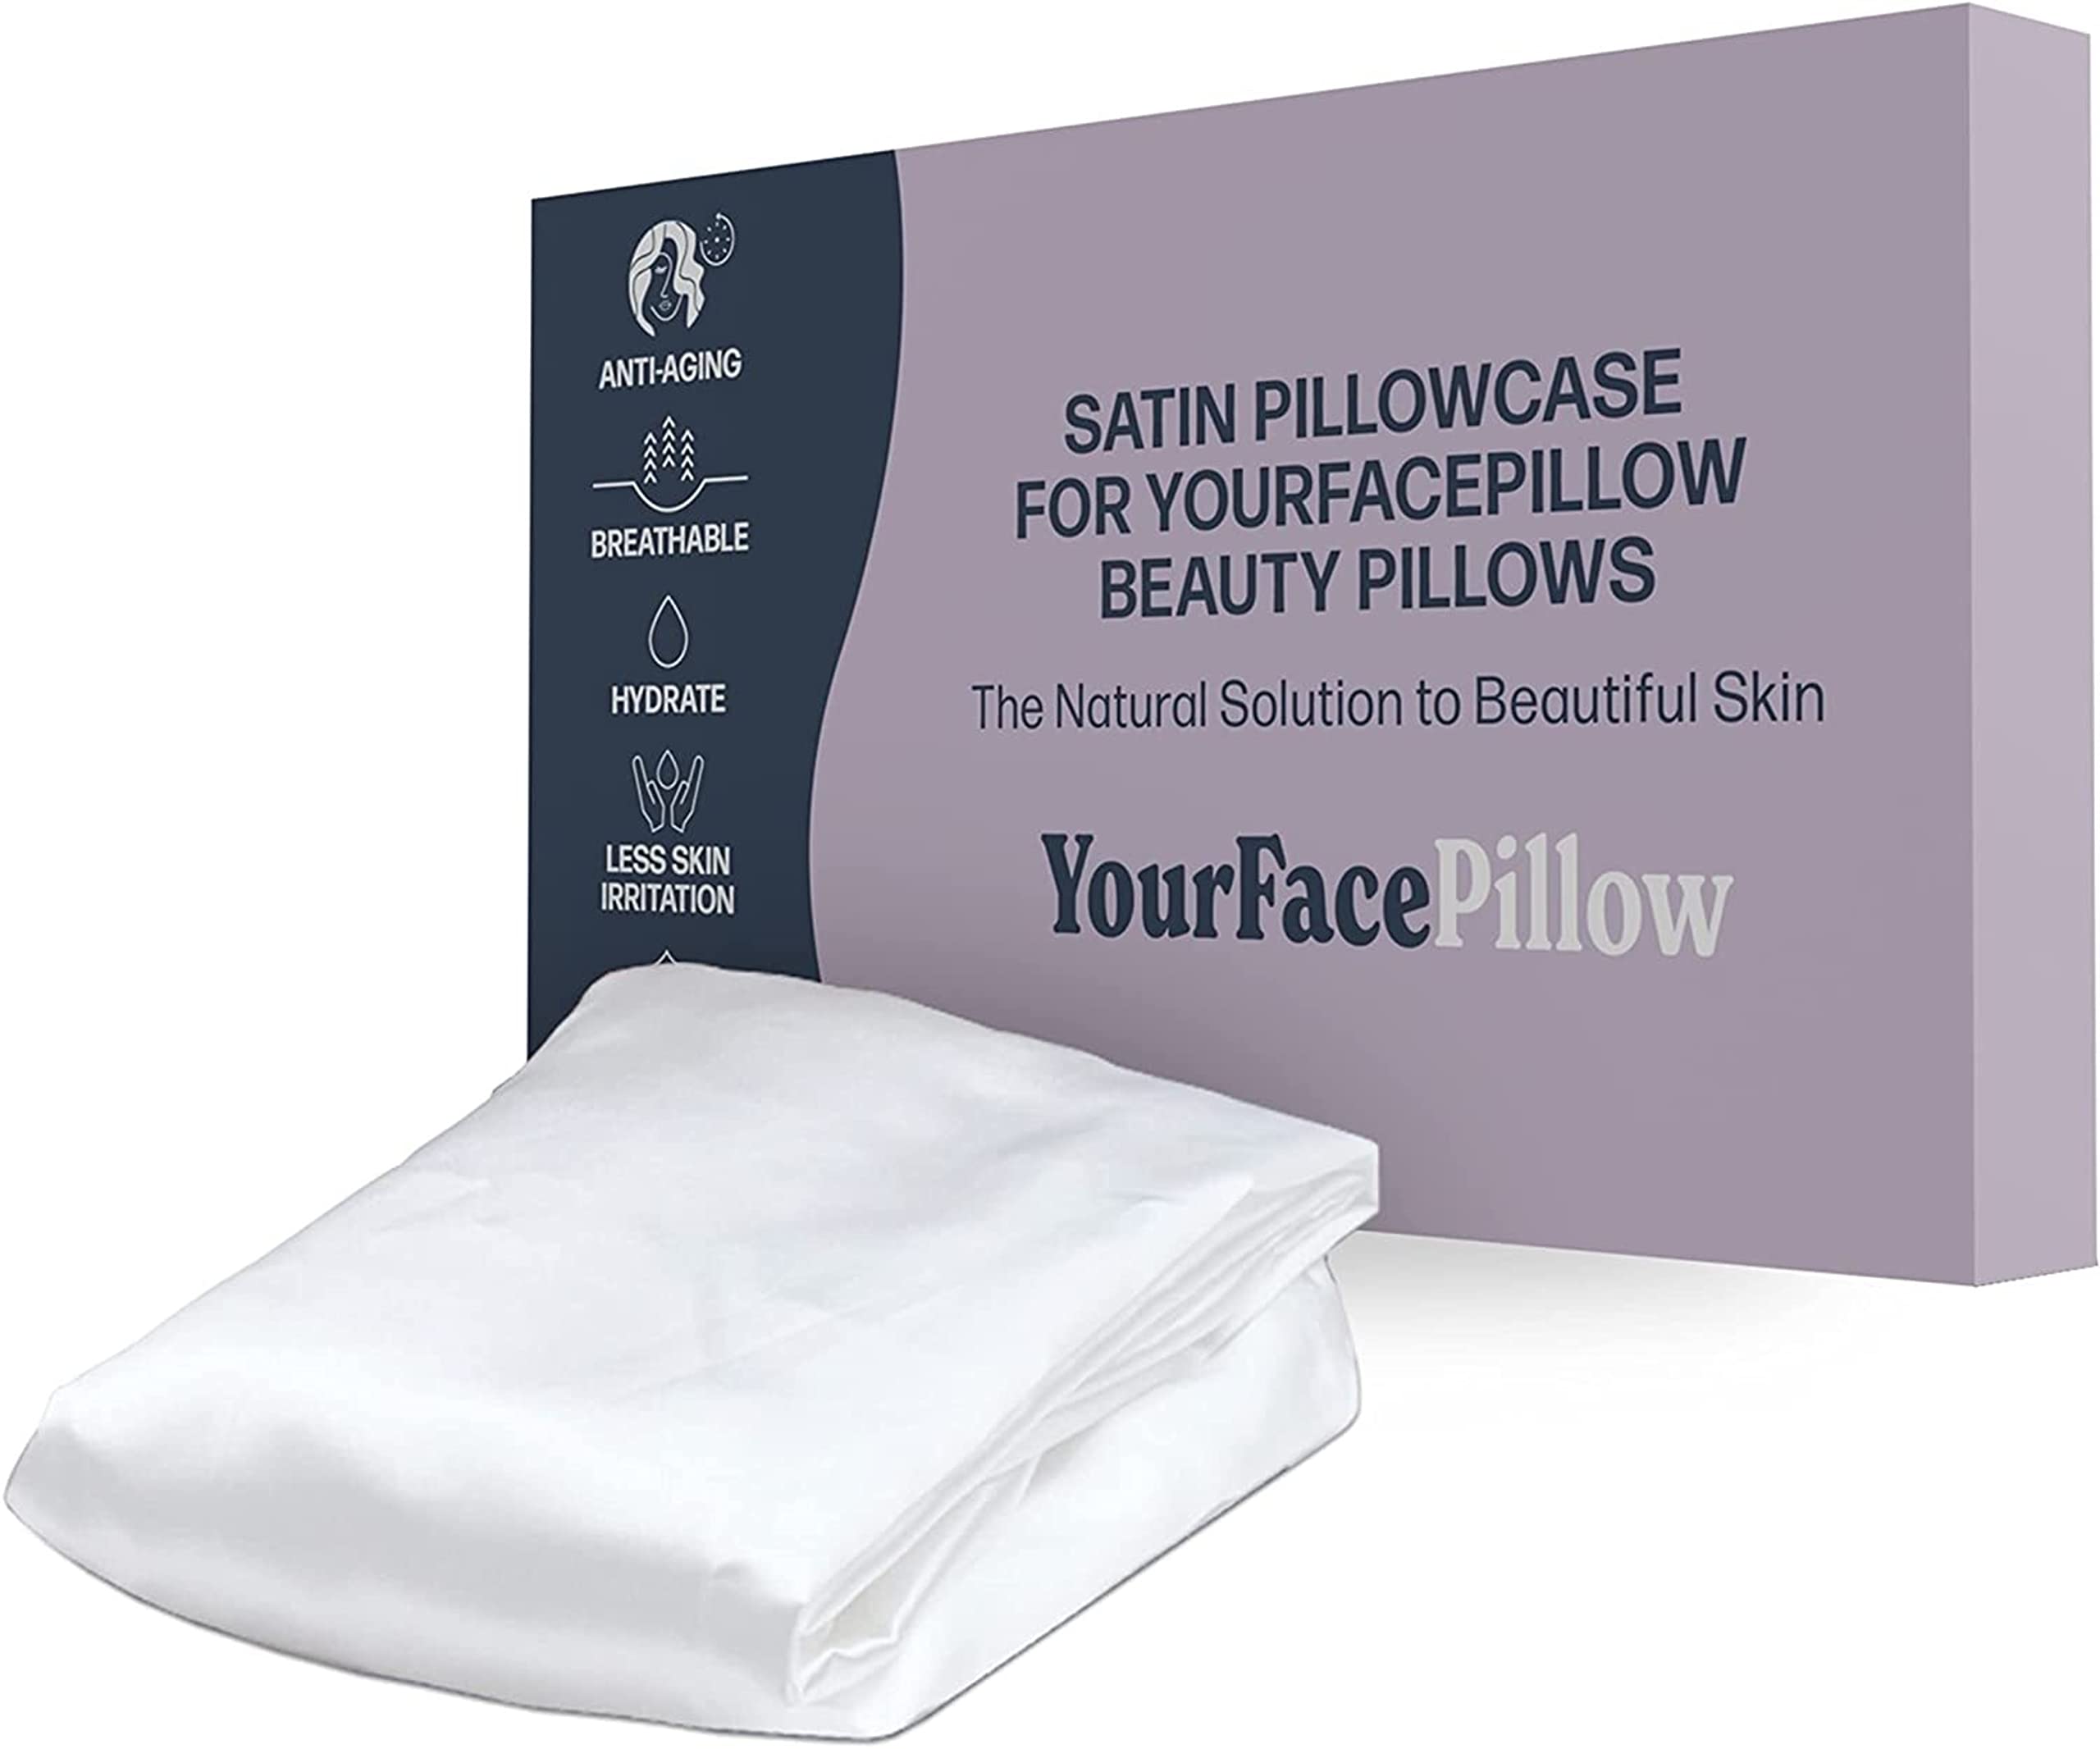 YourFacePillow Satin Pillowcase - Compatible with the YourFacePillow Beauty Pillow - Soft & Cool Satin Pillowcase with Hidden Zipper - Beauty Pillow Sold Separately (Set of 1, White)